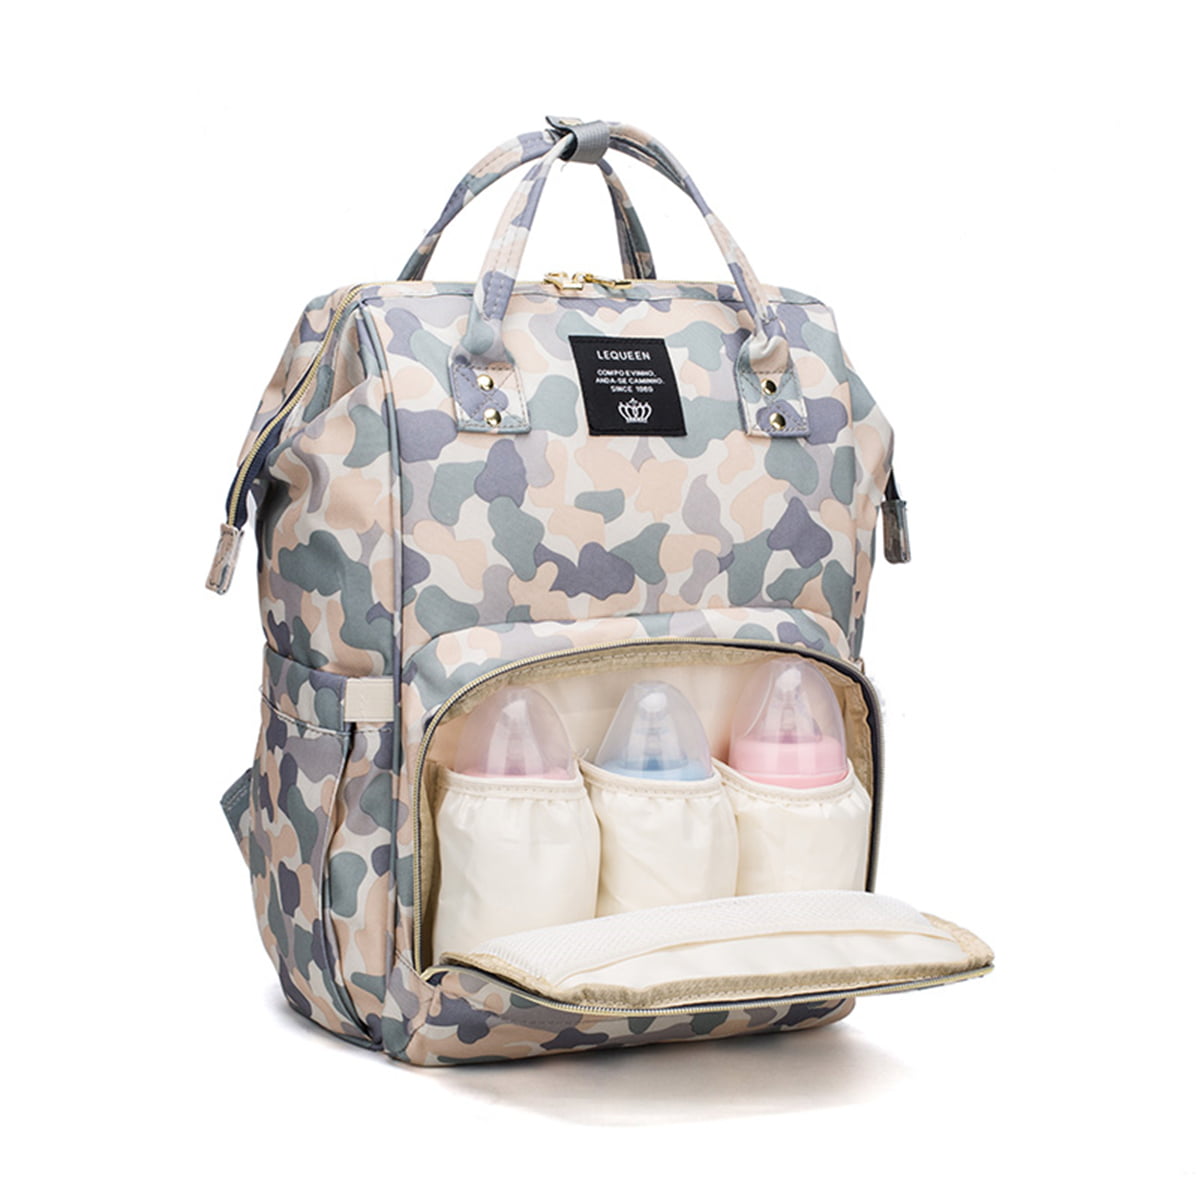 6 Colors Mummy Maternity Baby Nappy Diaper Bag Nursing Handbag Travel Backpack 12.2 x 7.09 x 17.32 inches